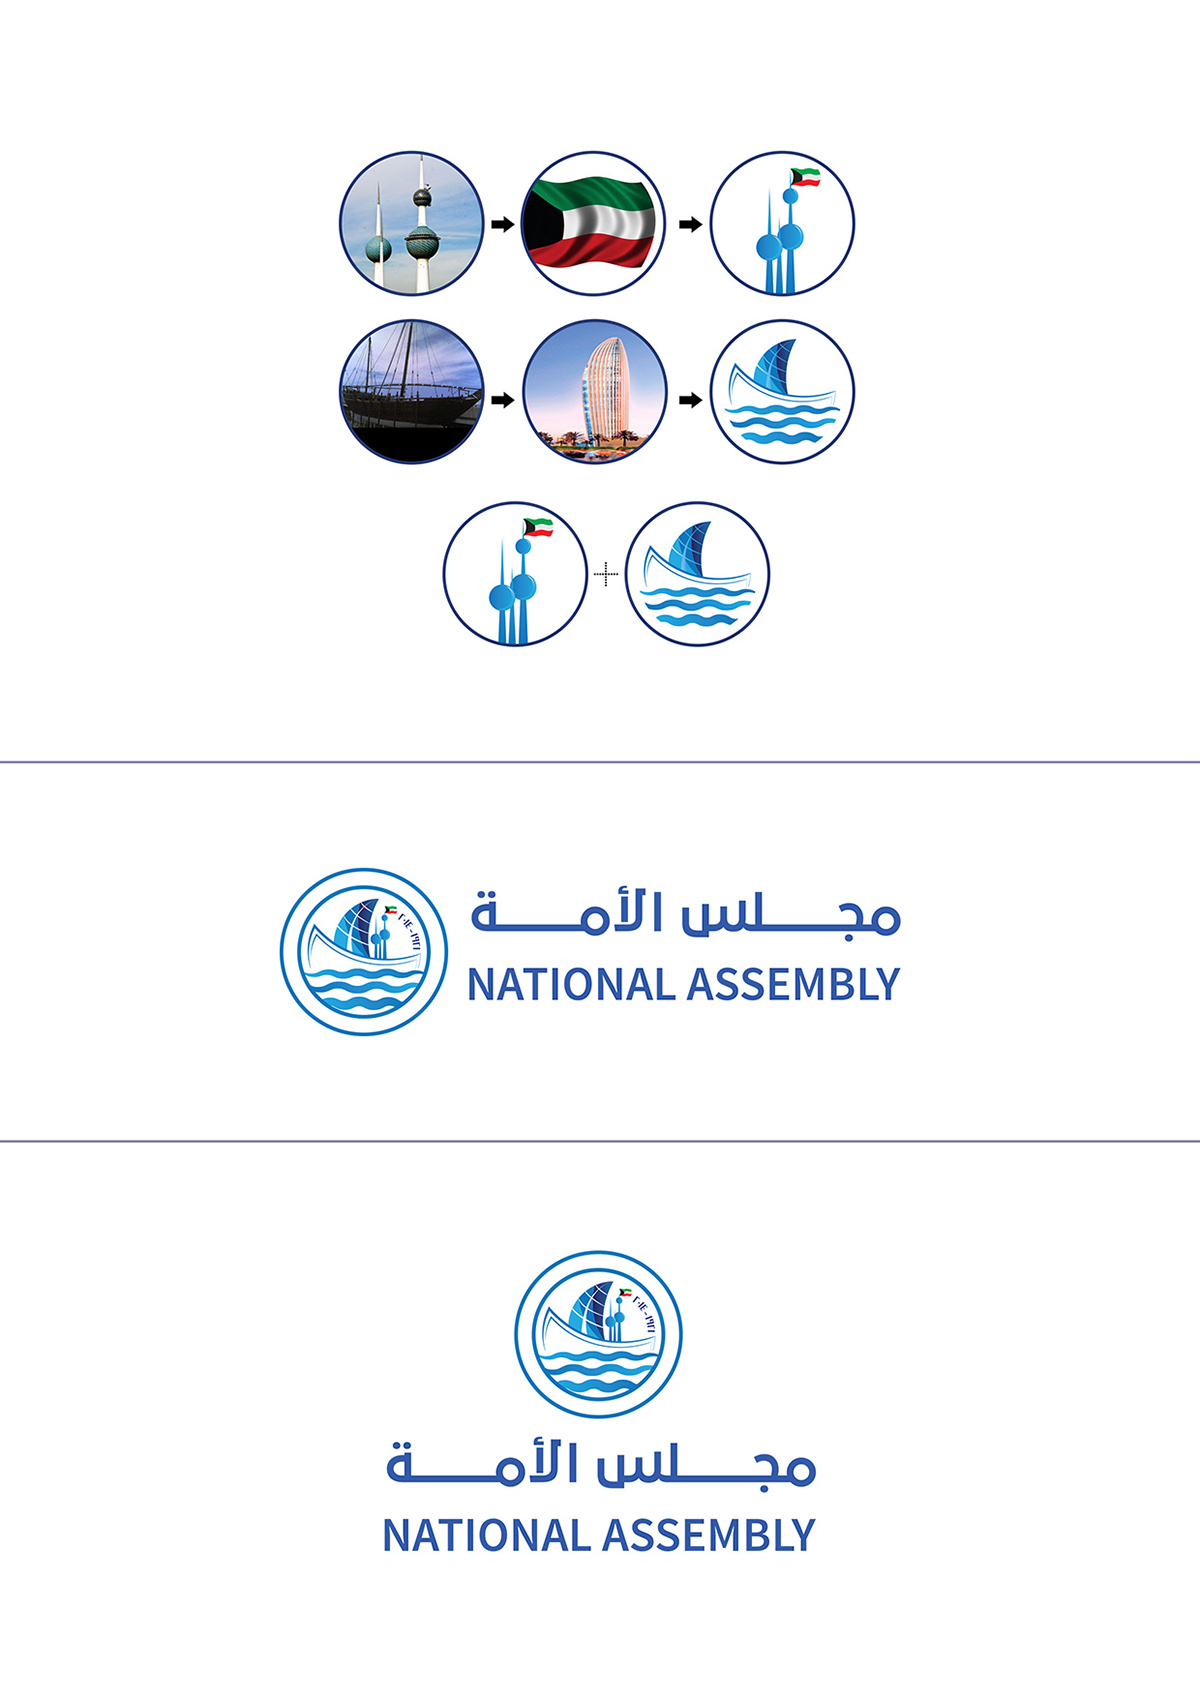 KU National Assembly Rebrand Competition logo brand